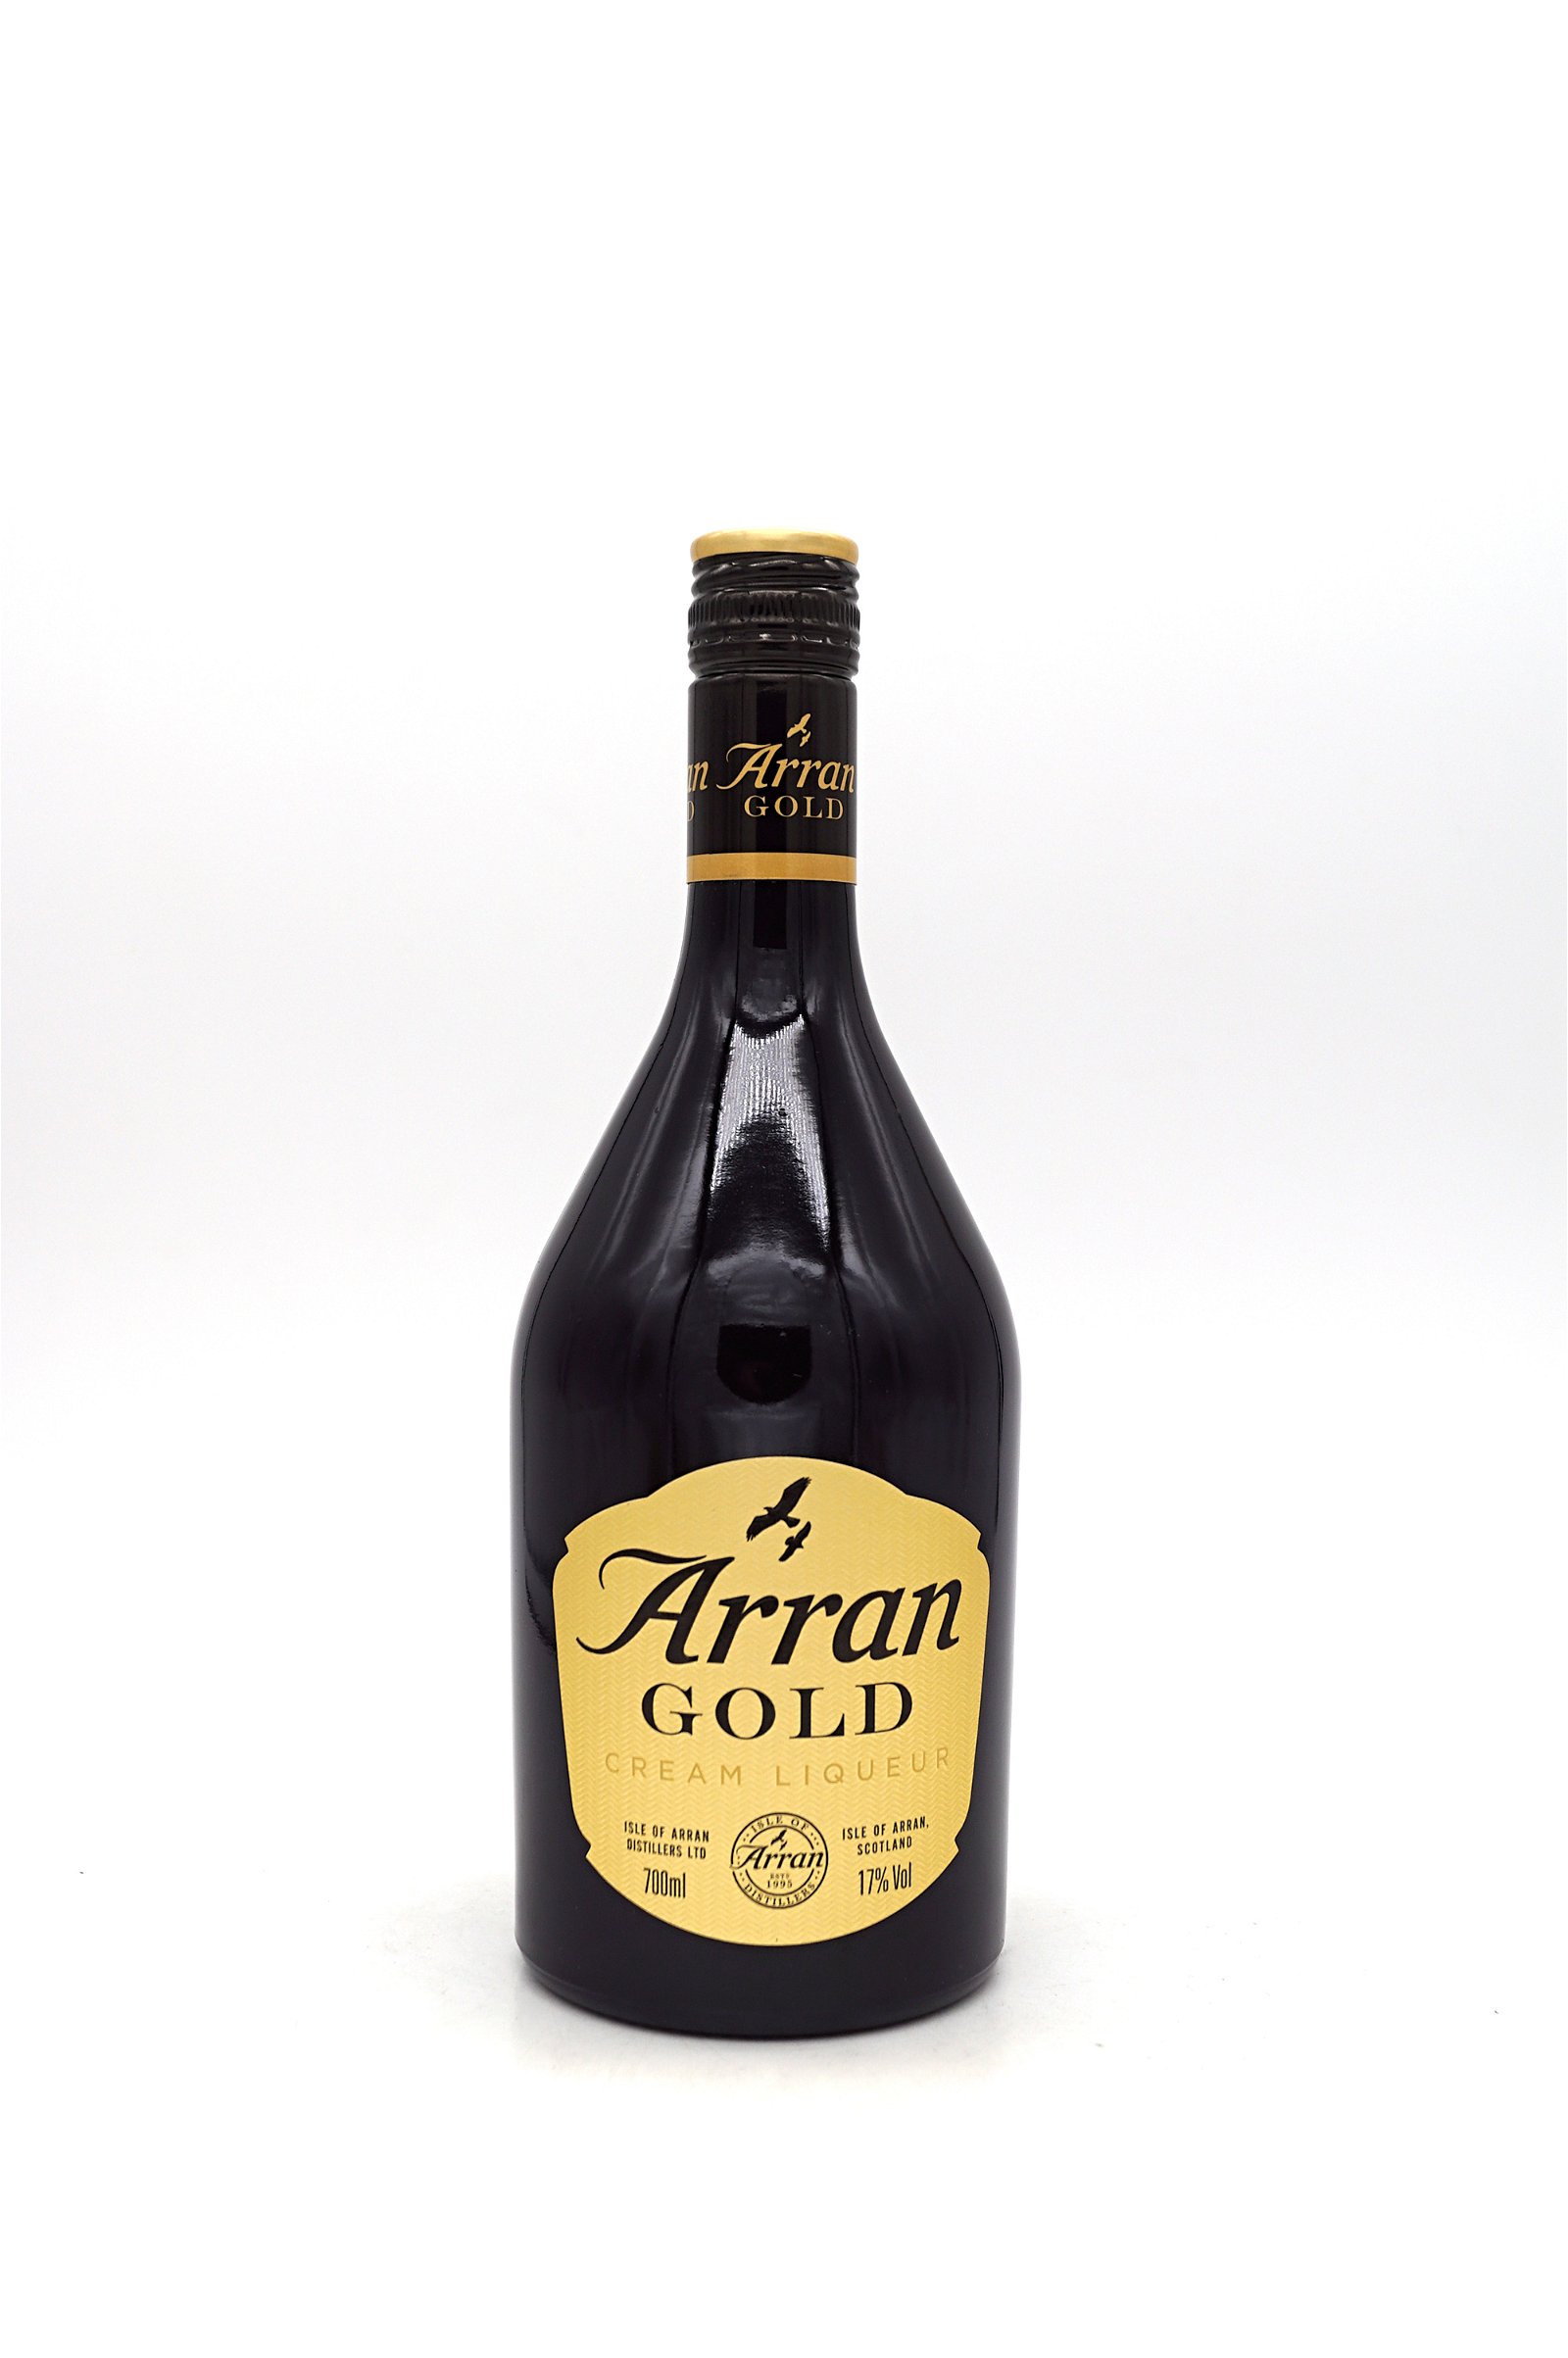 The Arran Gold Cream Liqueur